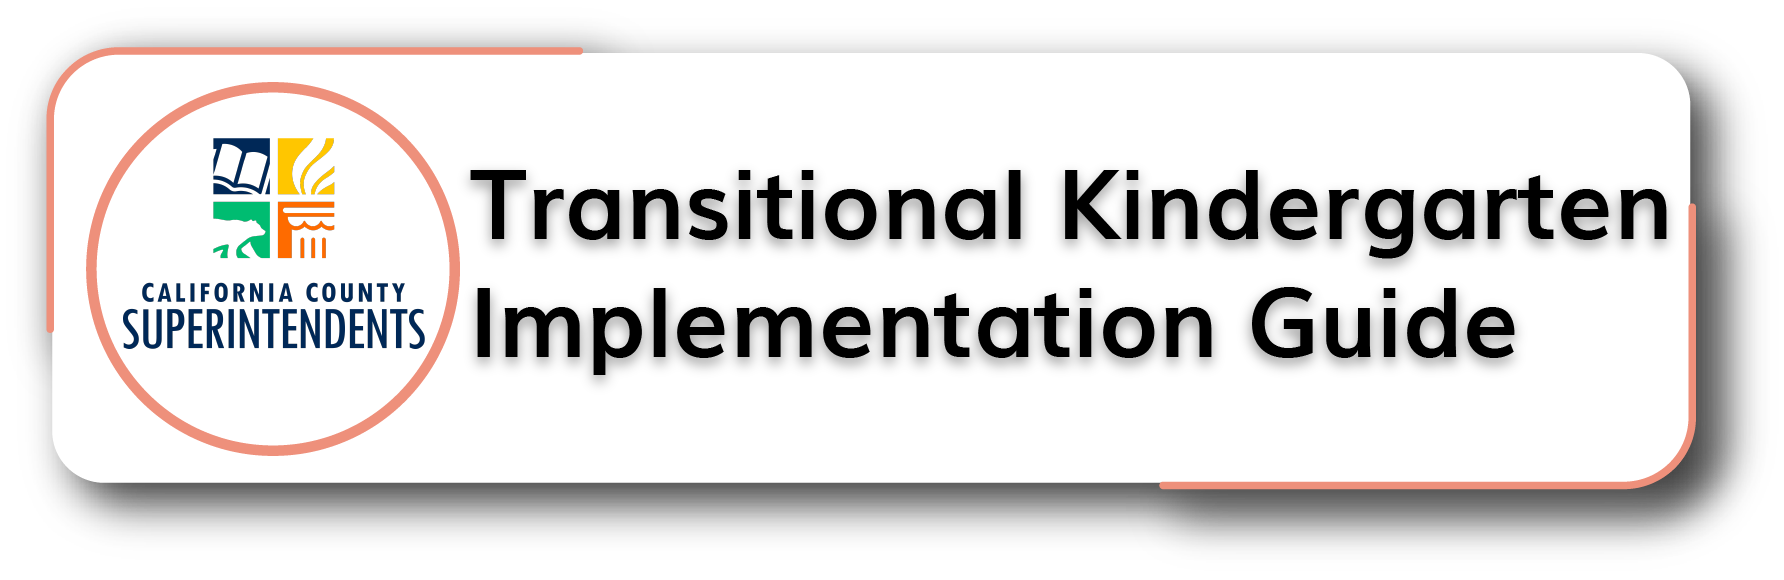 Transitional Kindergarten Implementation Guide Button